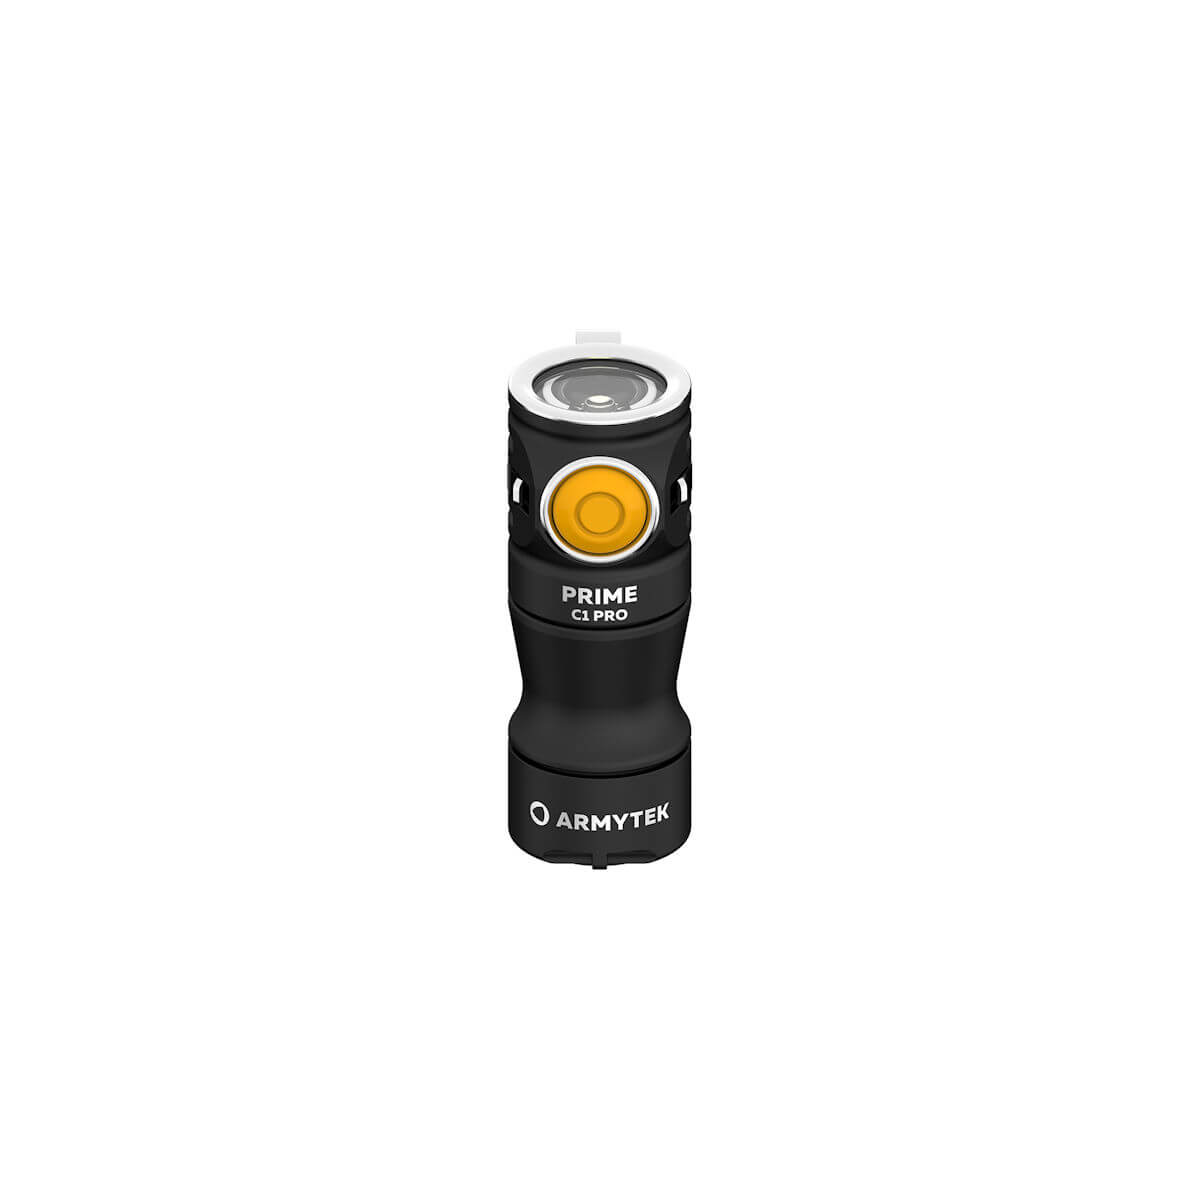 Armytek Prime C1 Pro LED Taschenlampe mit Akku warmweiss LED-Taschenlampe Taschenlampe